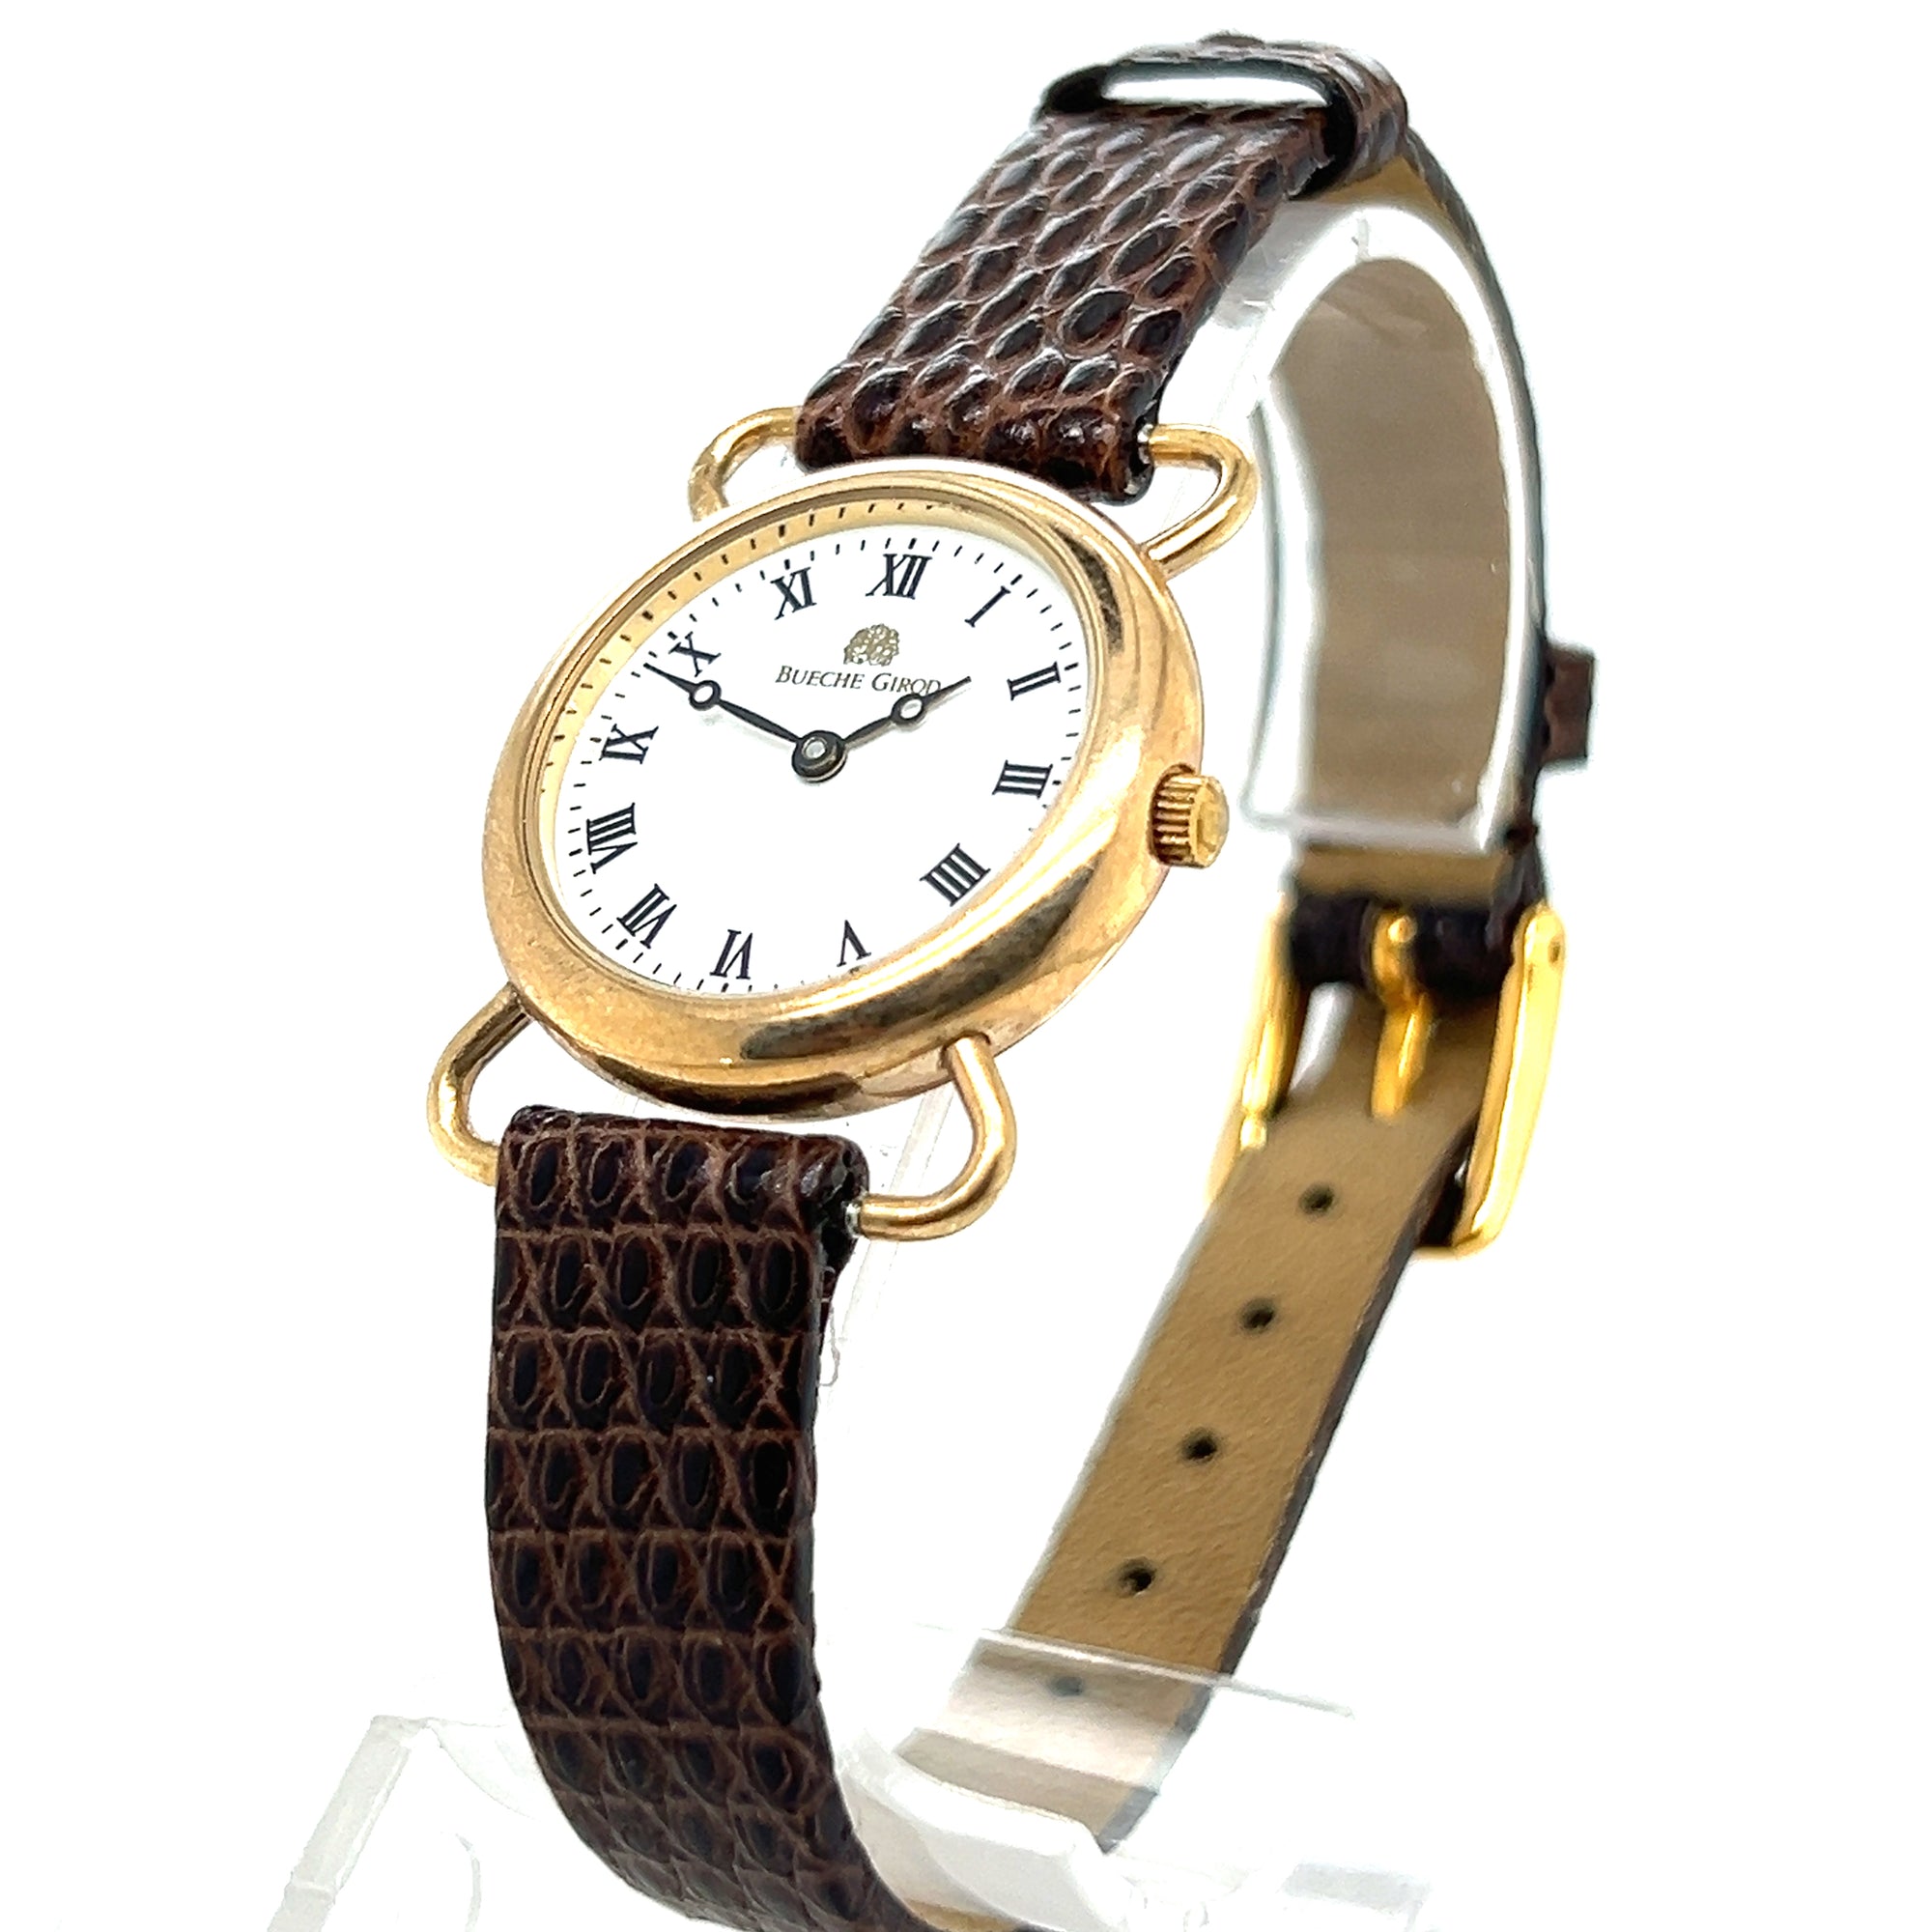 Bueche Girod 9ct Gold Ladies Wrist Watch